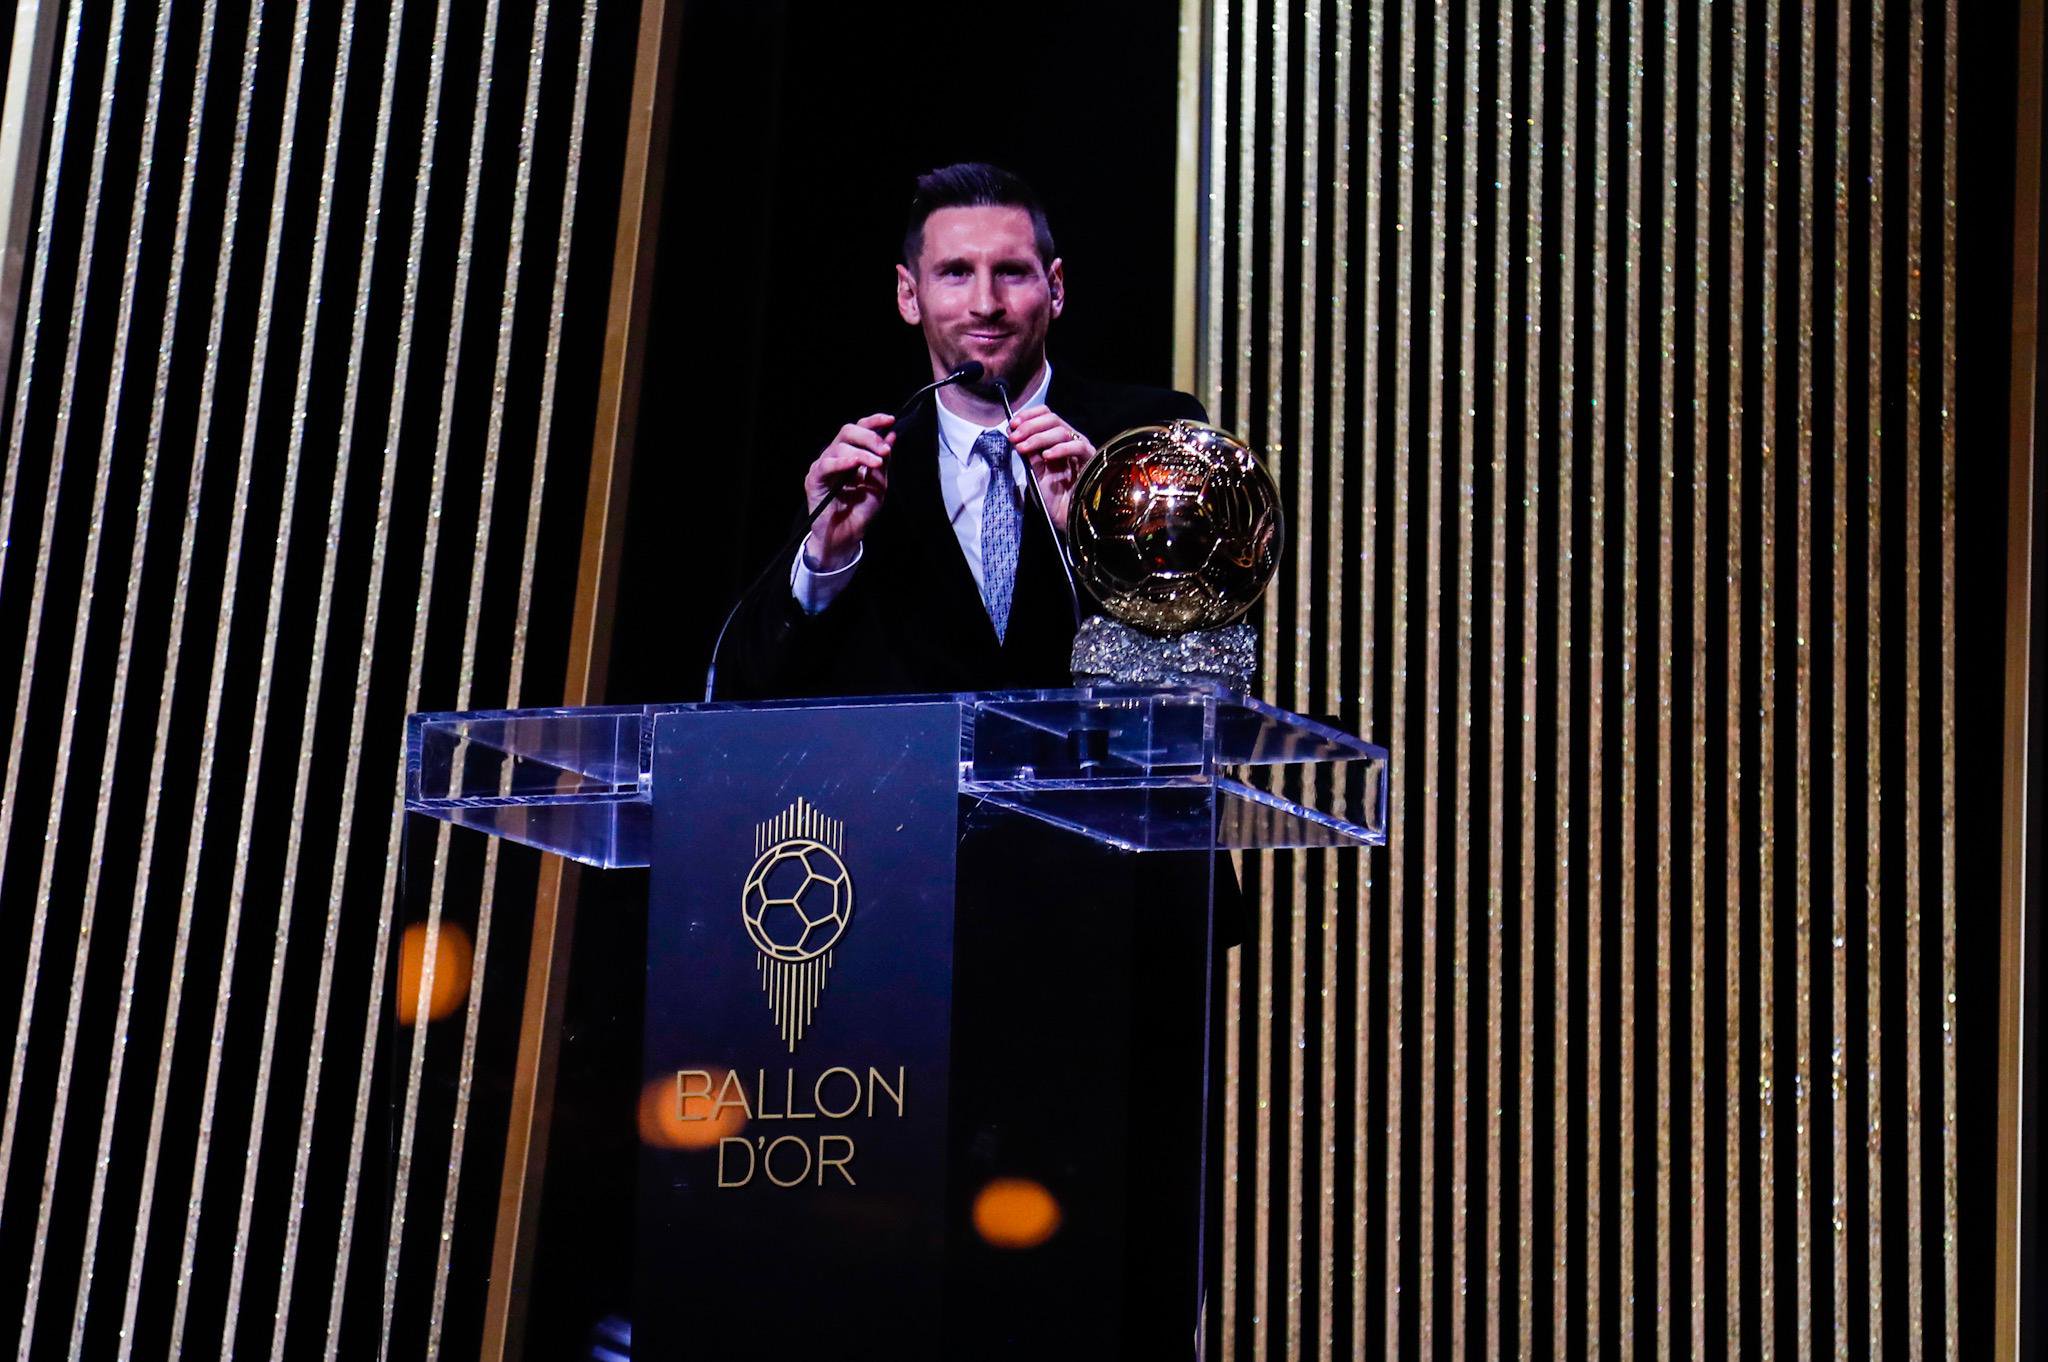 Messi se llevó el balón de oro. Foto: Messi